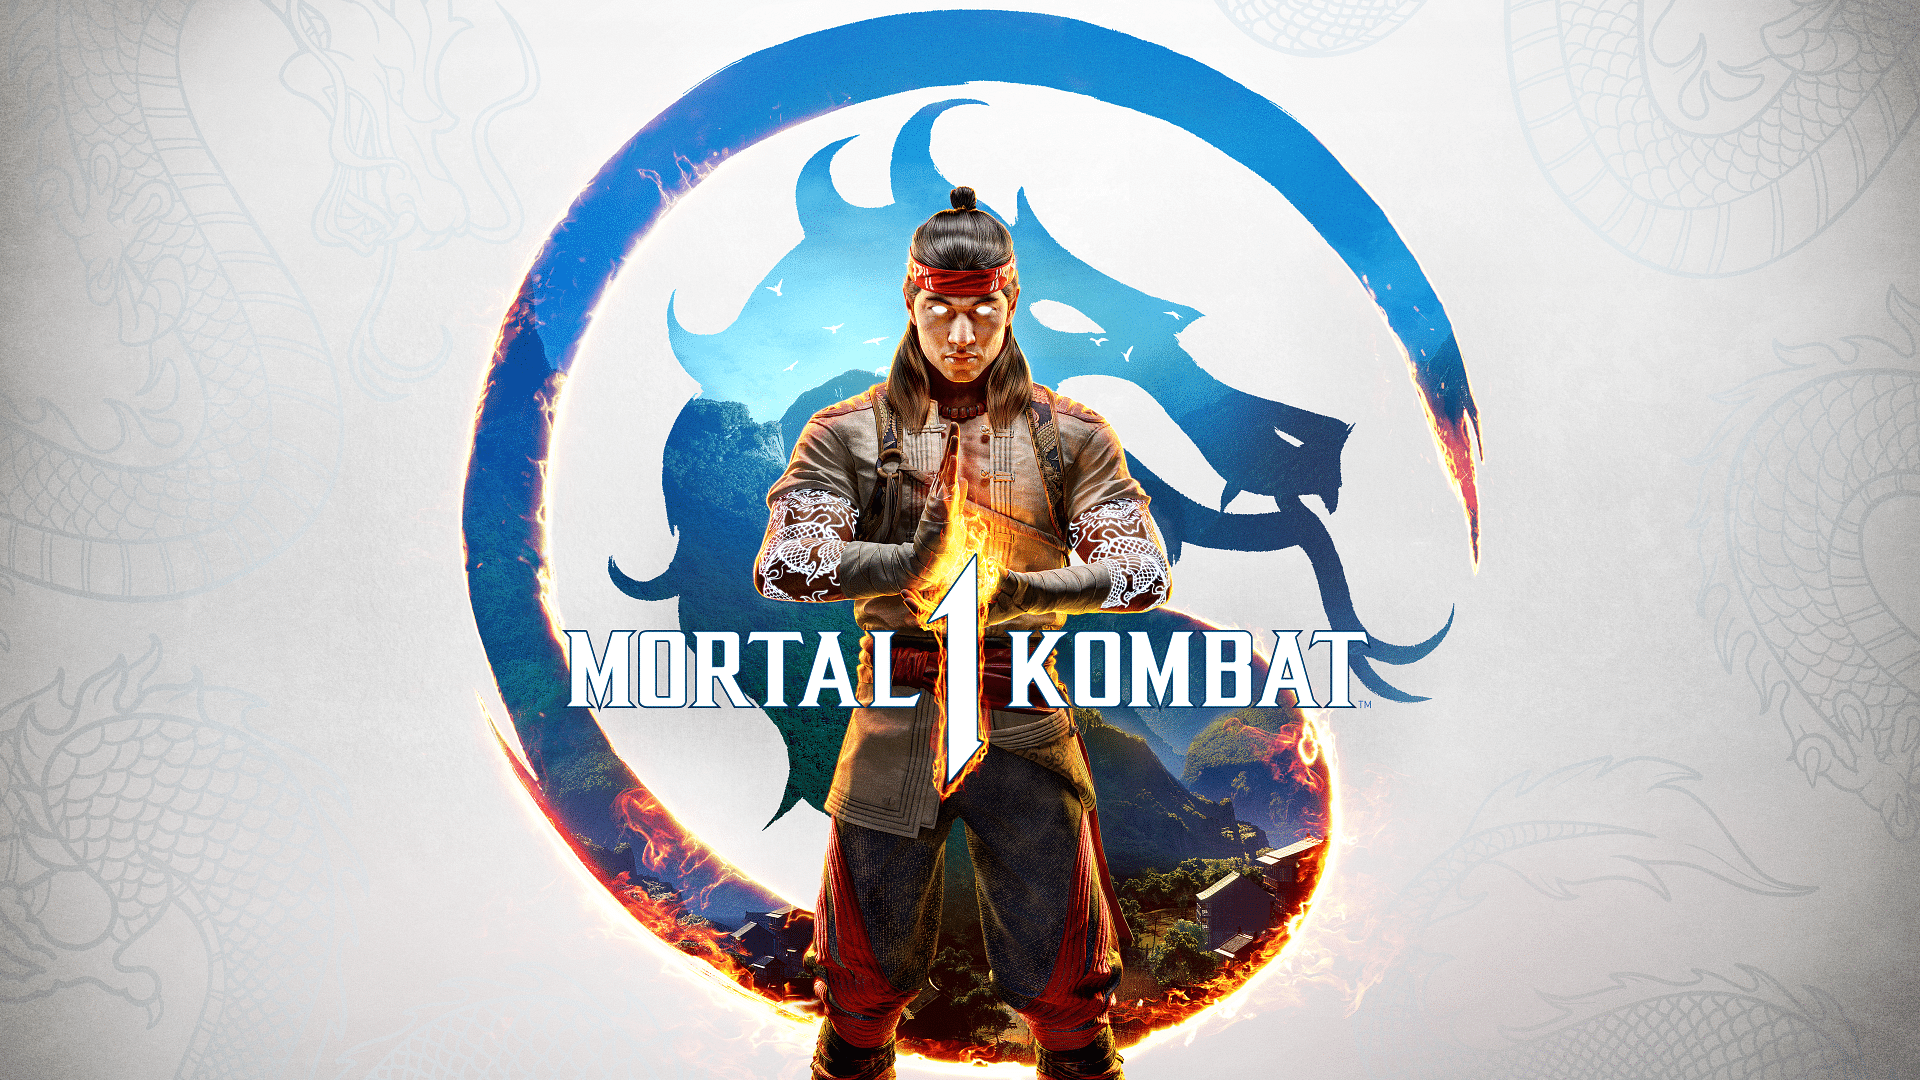 An image showing Liu Kang from Mortal Kombat 1 with the logo